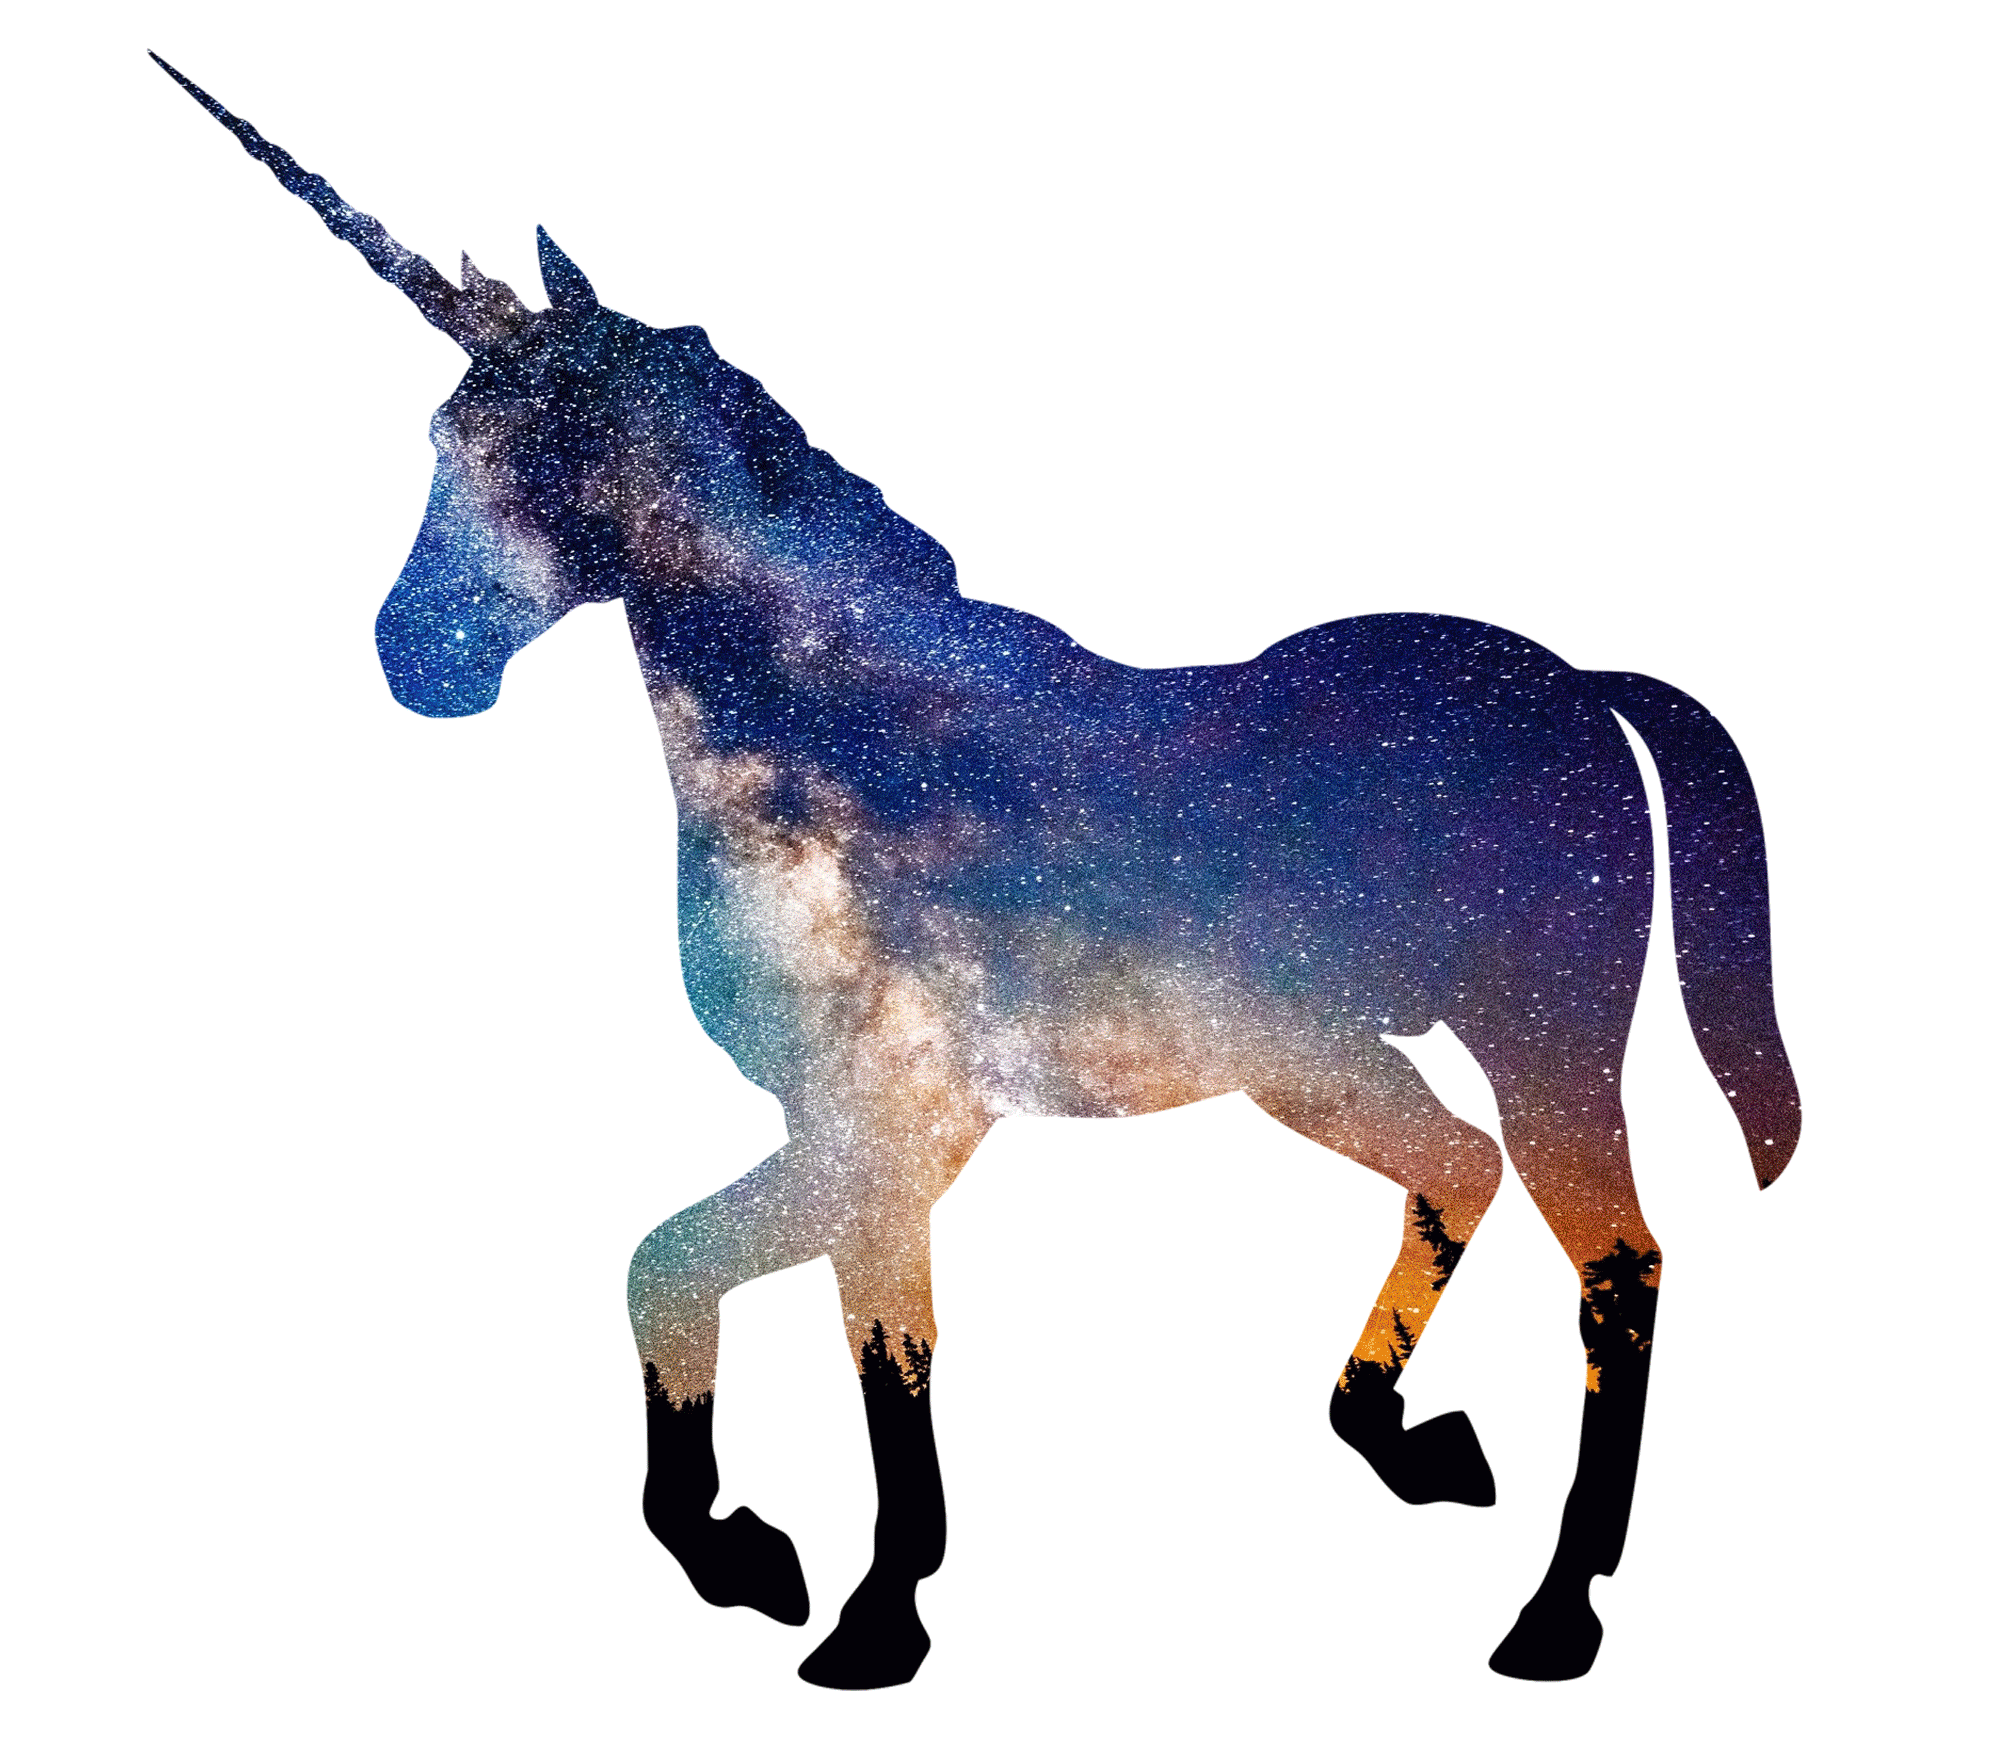 The Unicorn Avatar